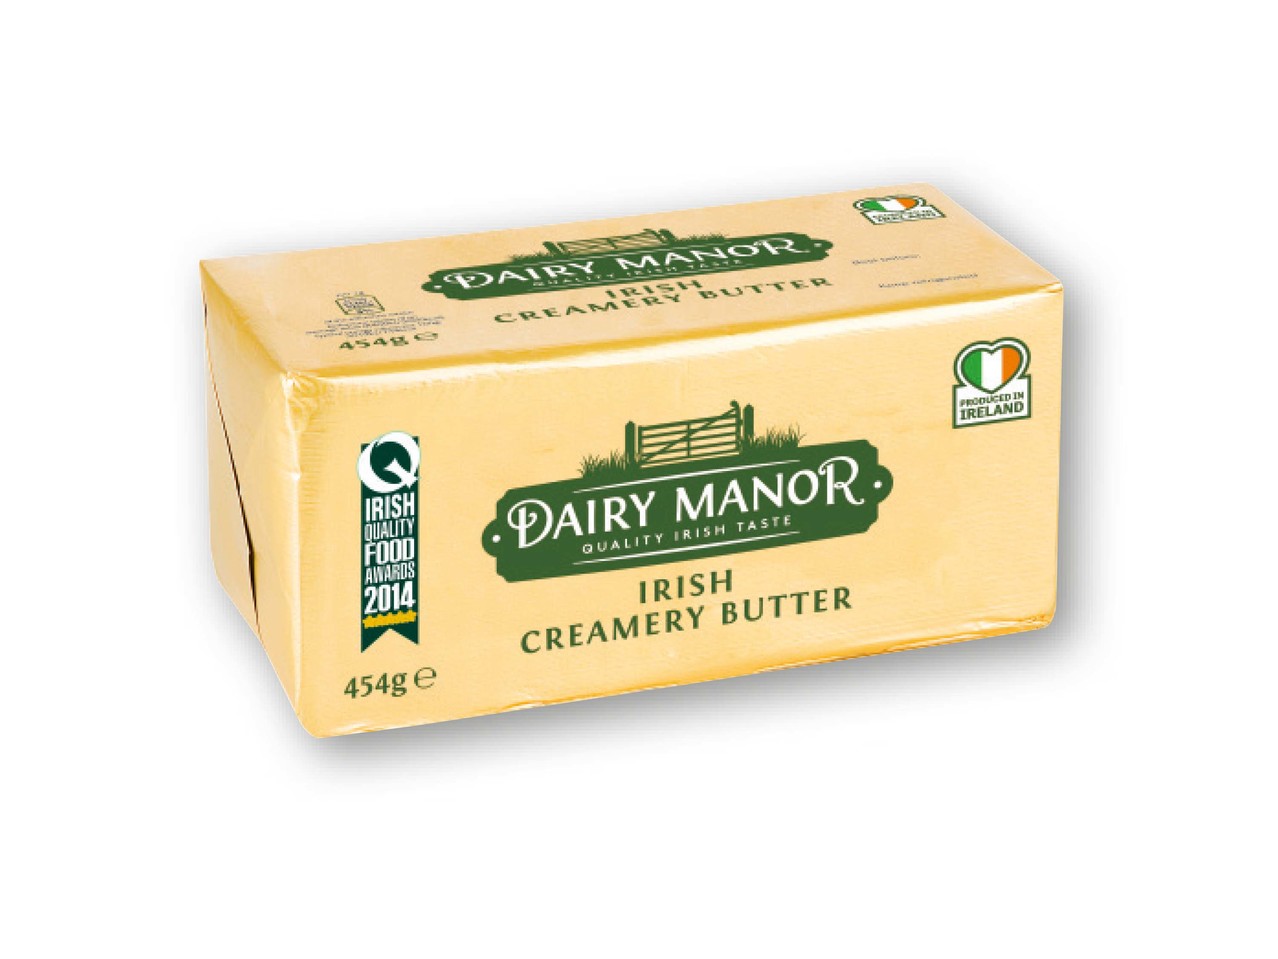 Dairy Manor CREAMERY BUTTER